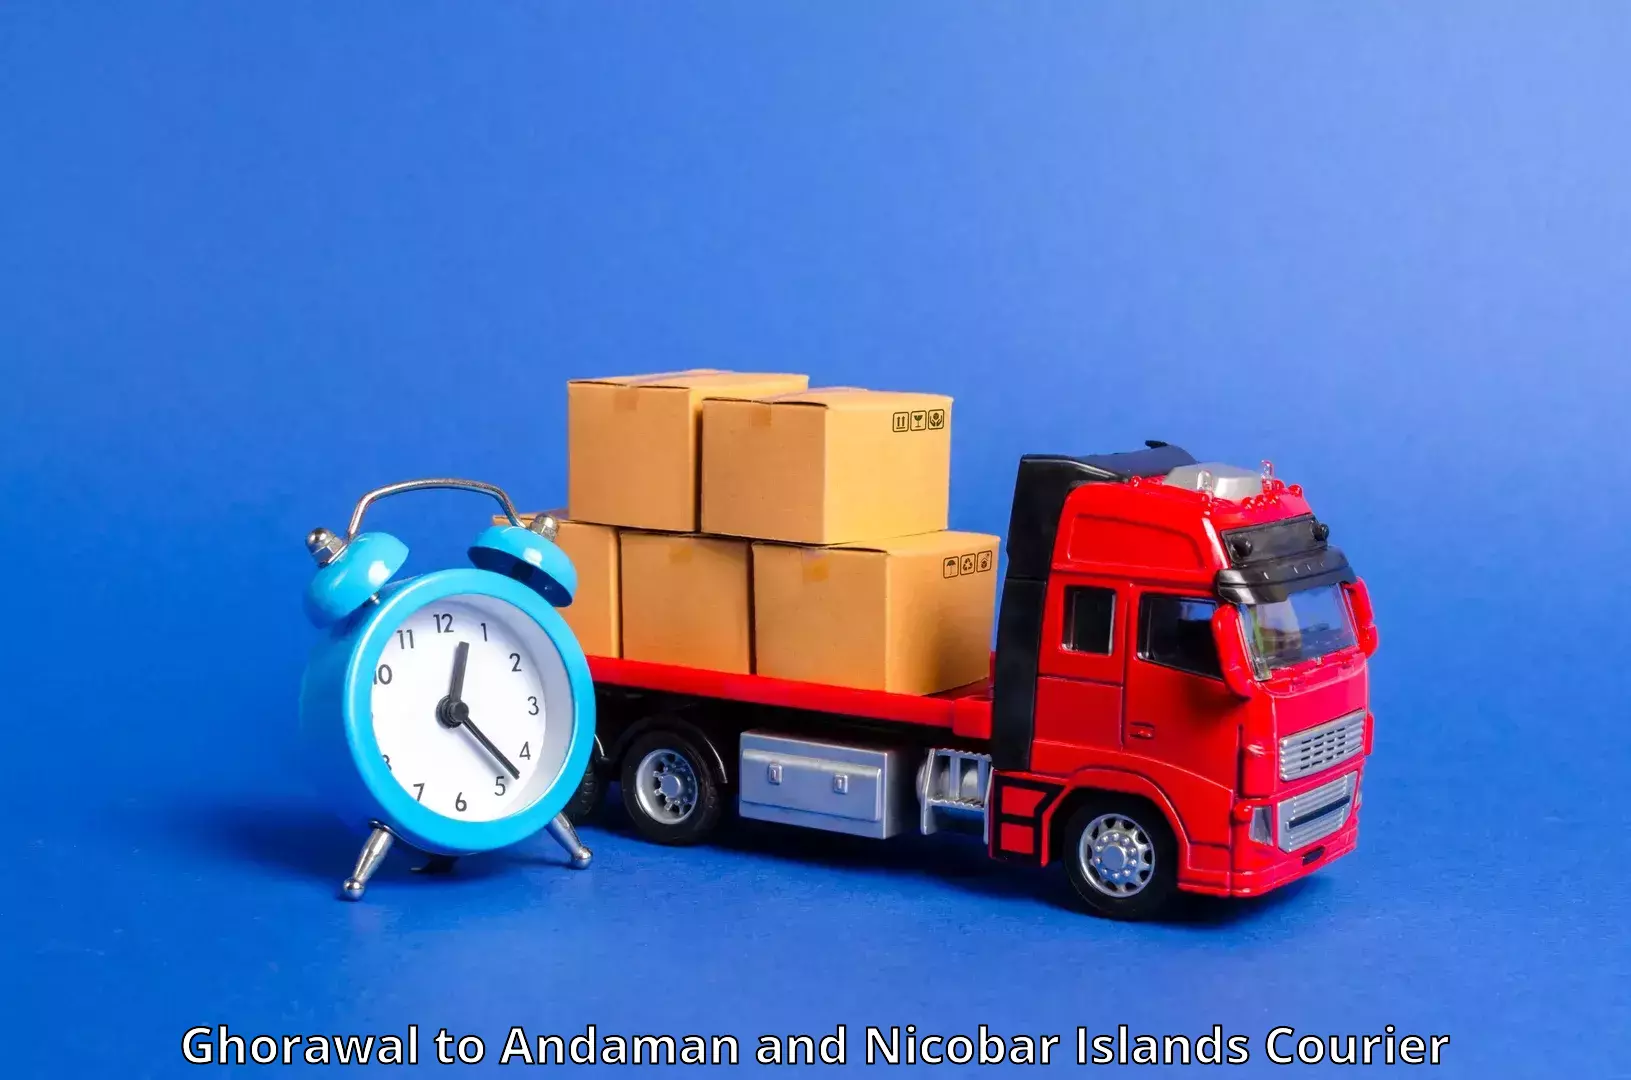 Global logistics network Ghorawal to Andaman and Nicobar Islands